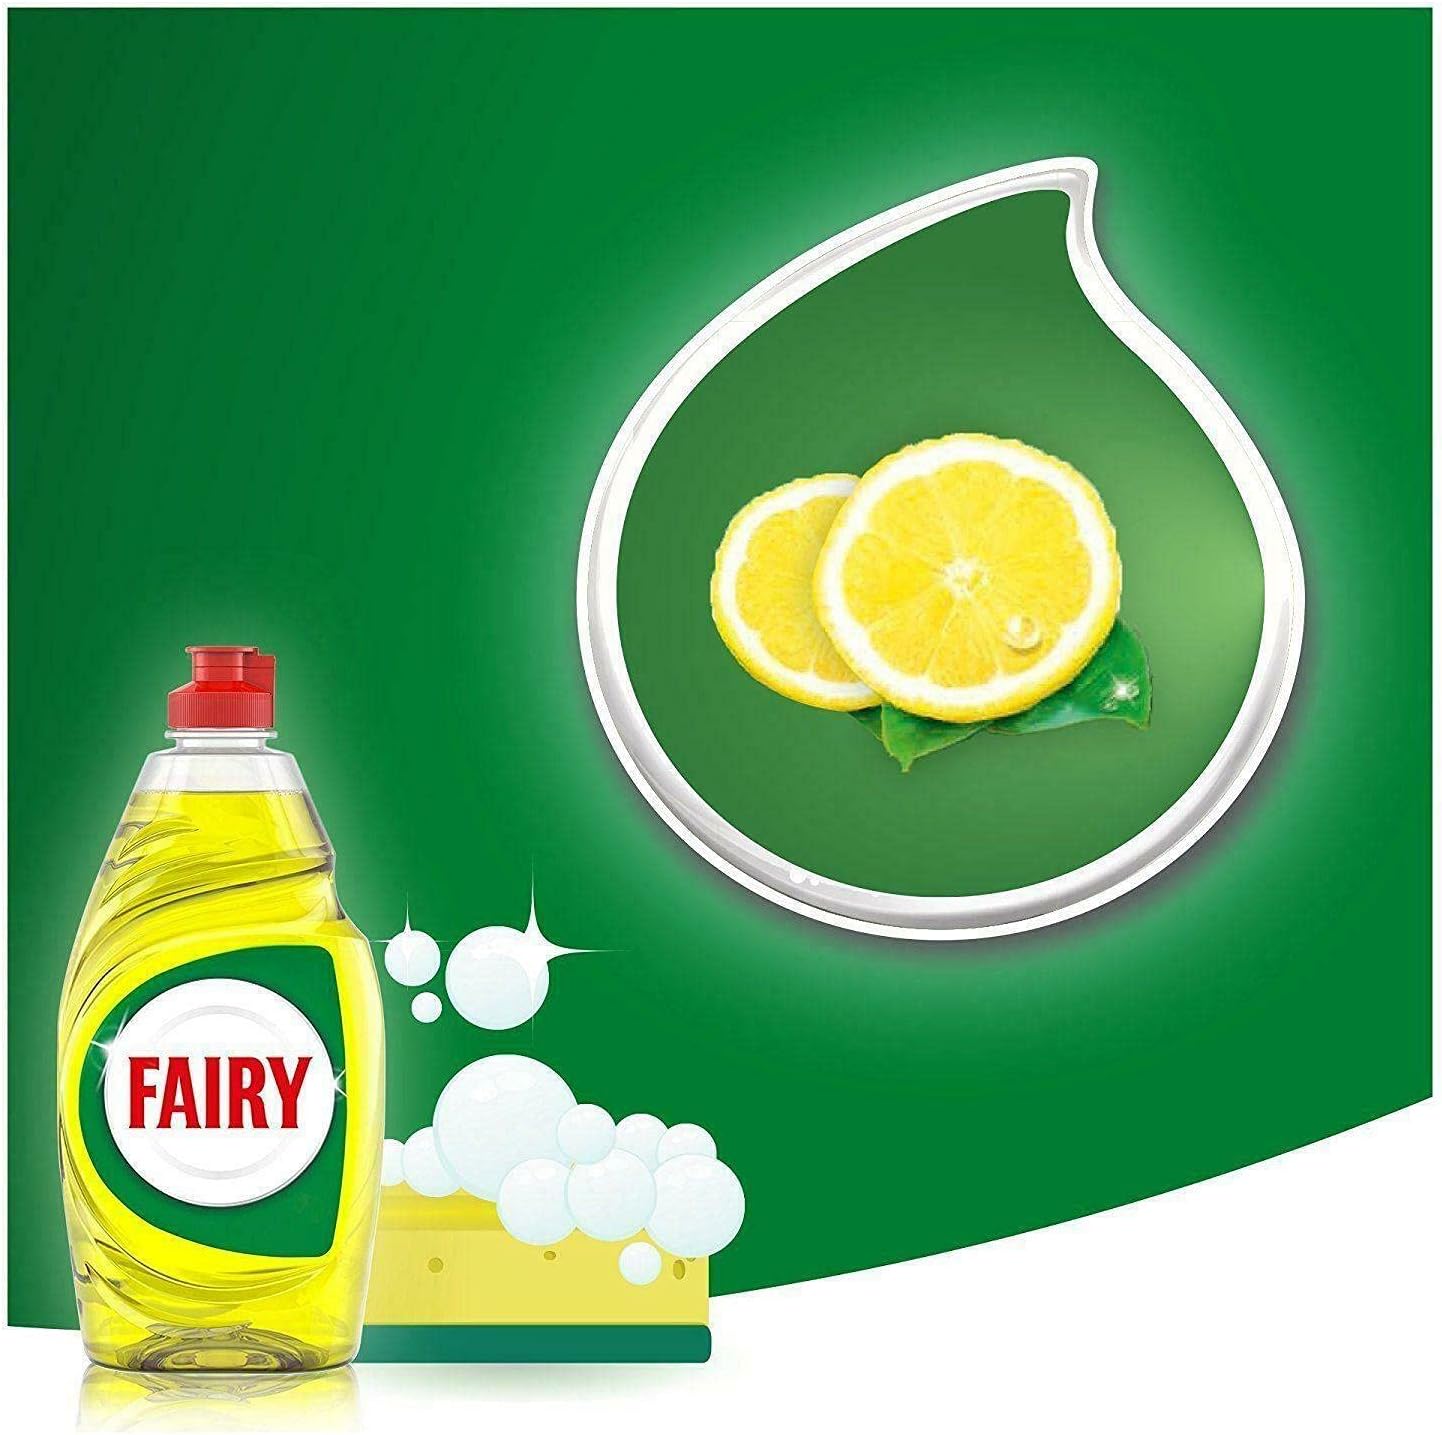 Fairy Lemon Washing Up Liquid (433ml) - Pack of 2 : Patio, Lawn & Garden